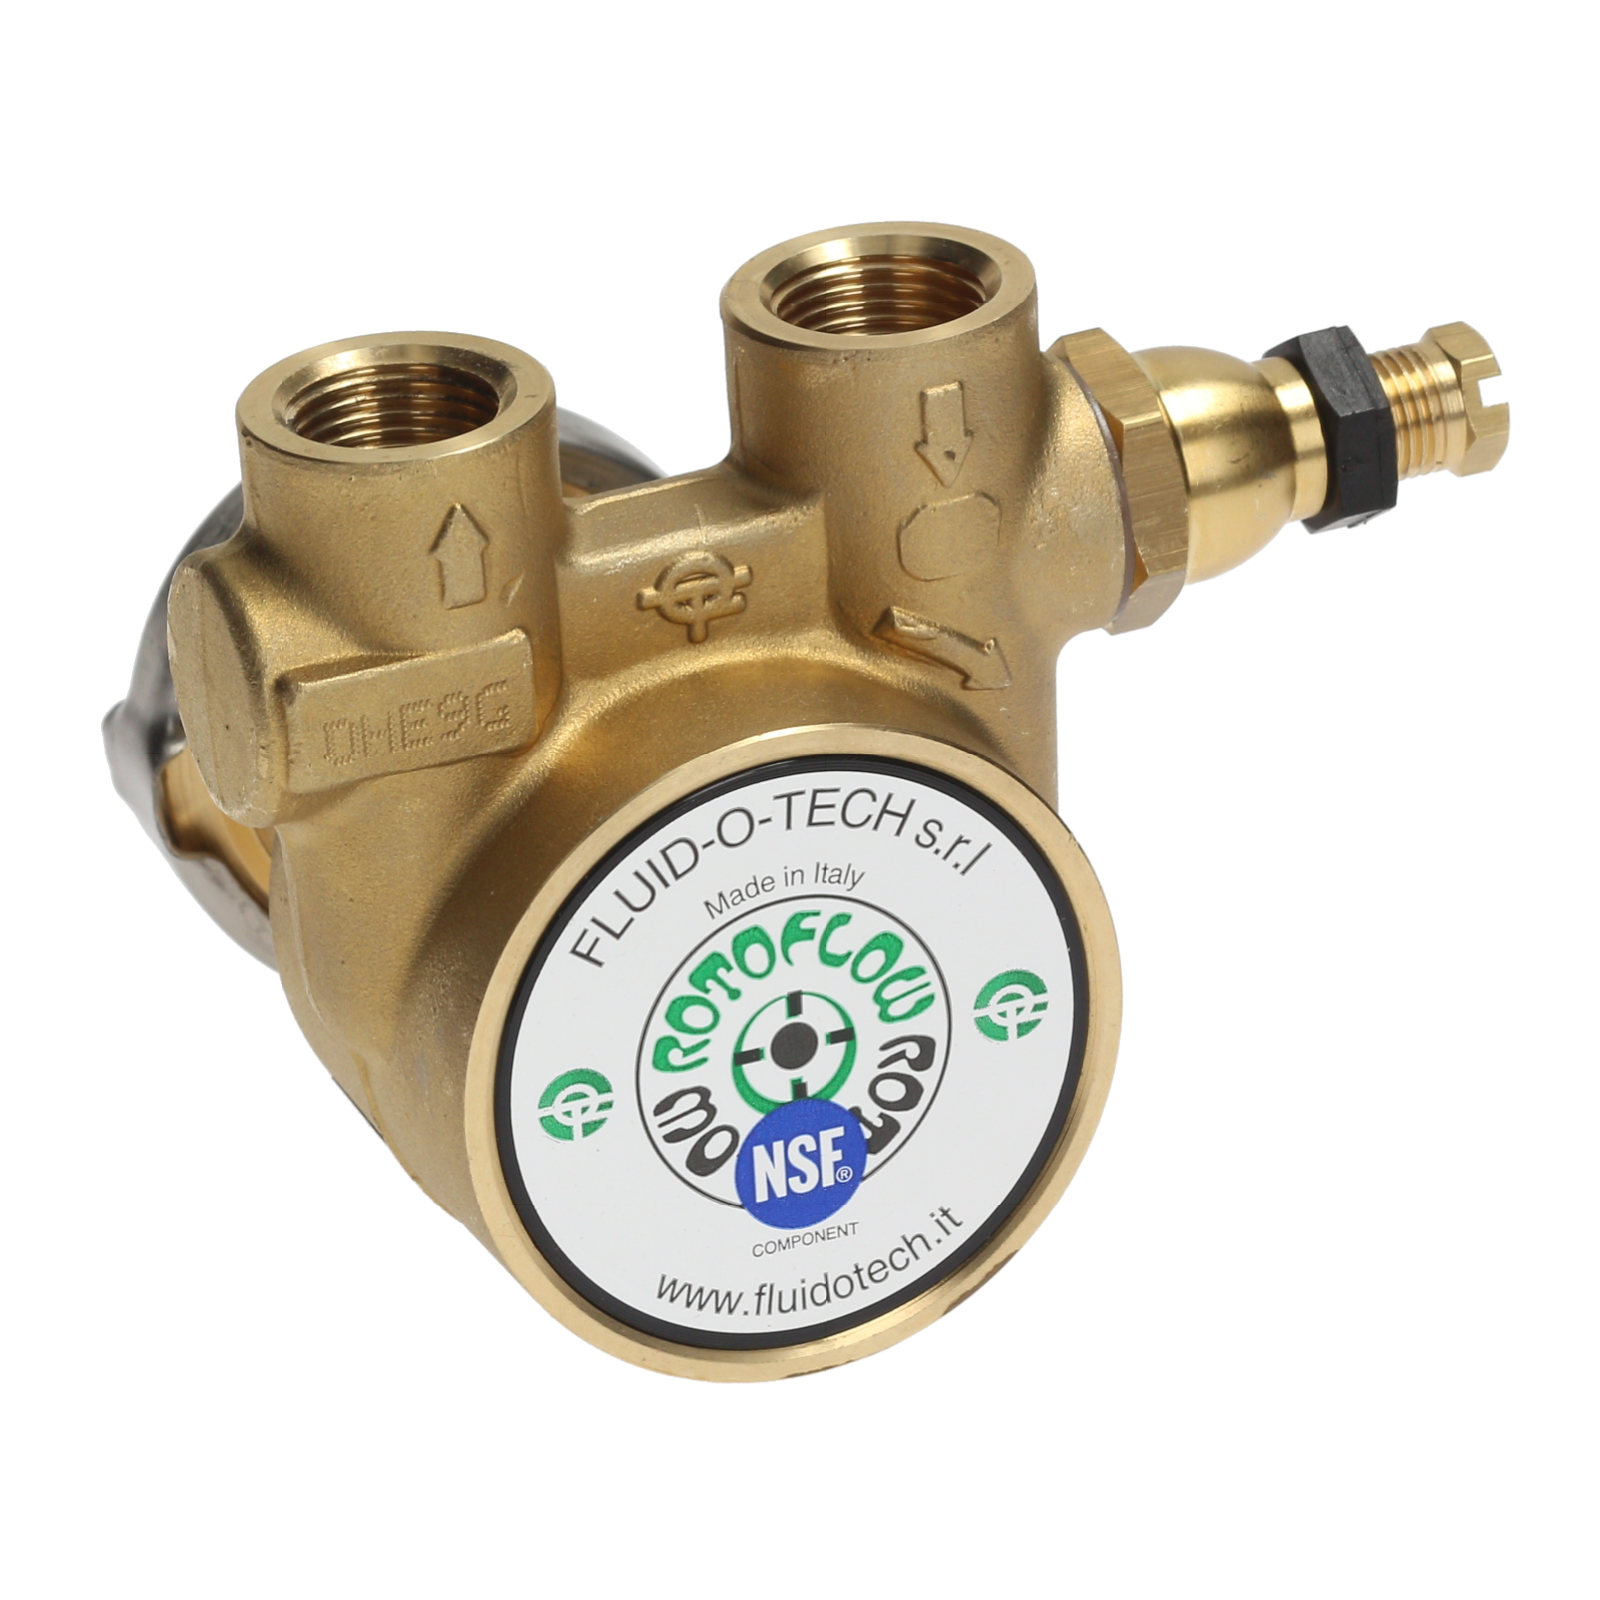 Fluid-O-Tech Rotoflow Rotary Vane Water Pump (50L/h)